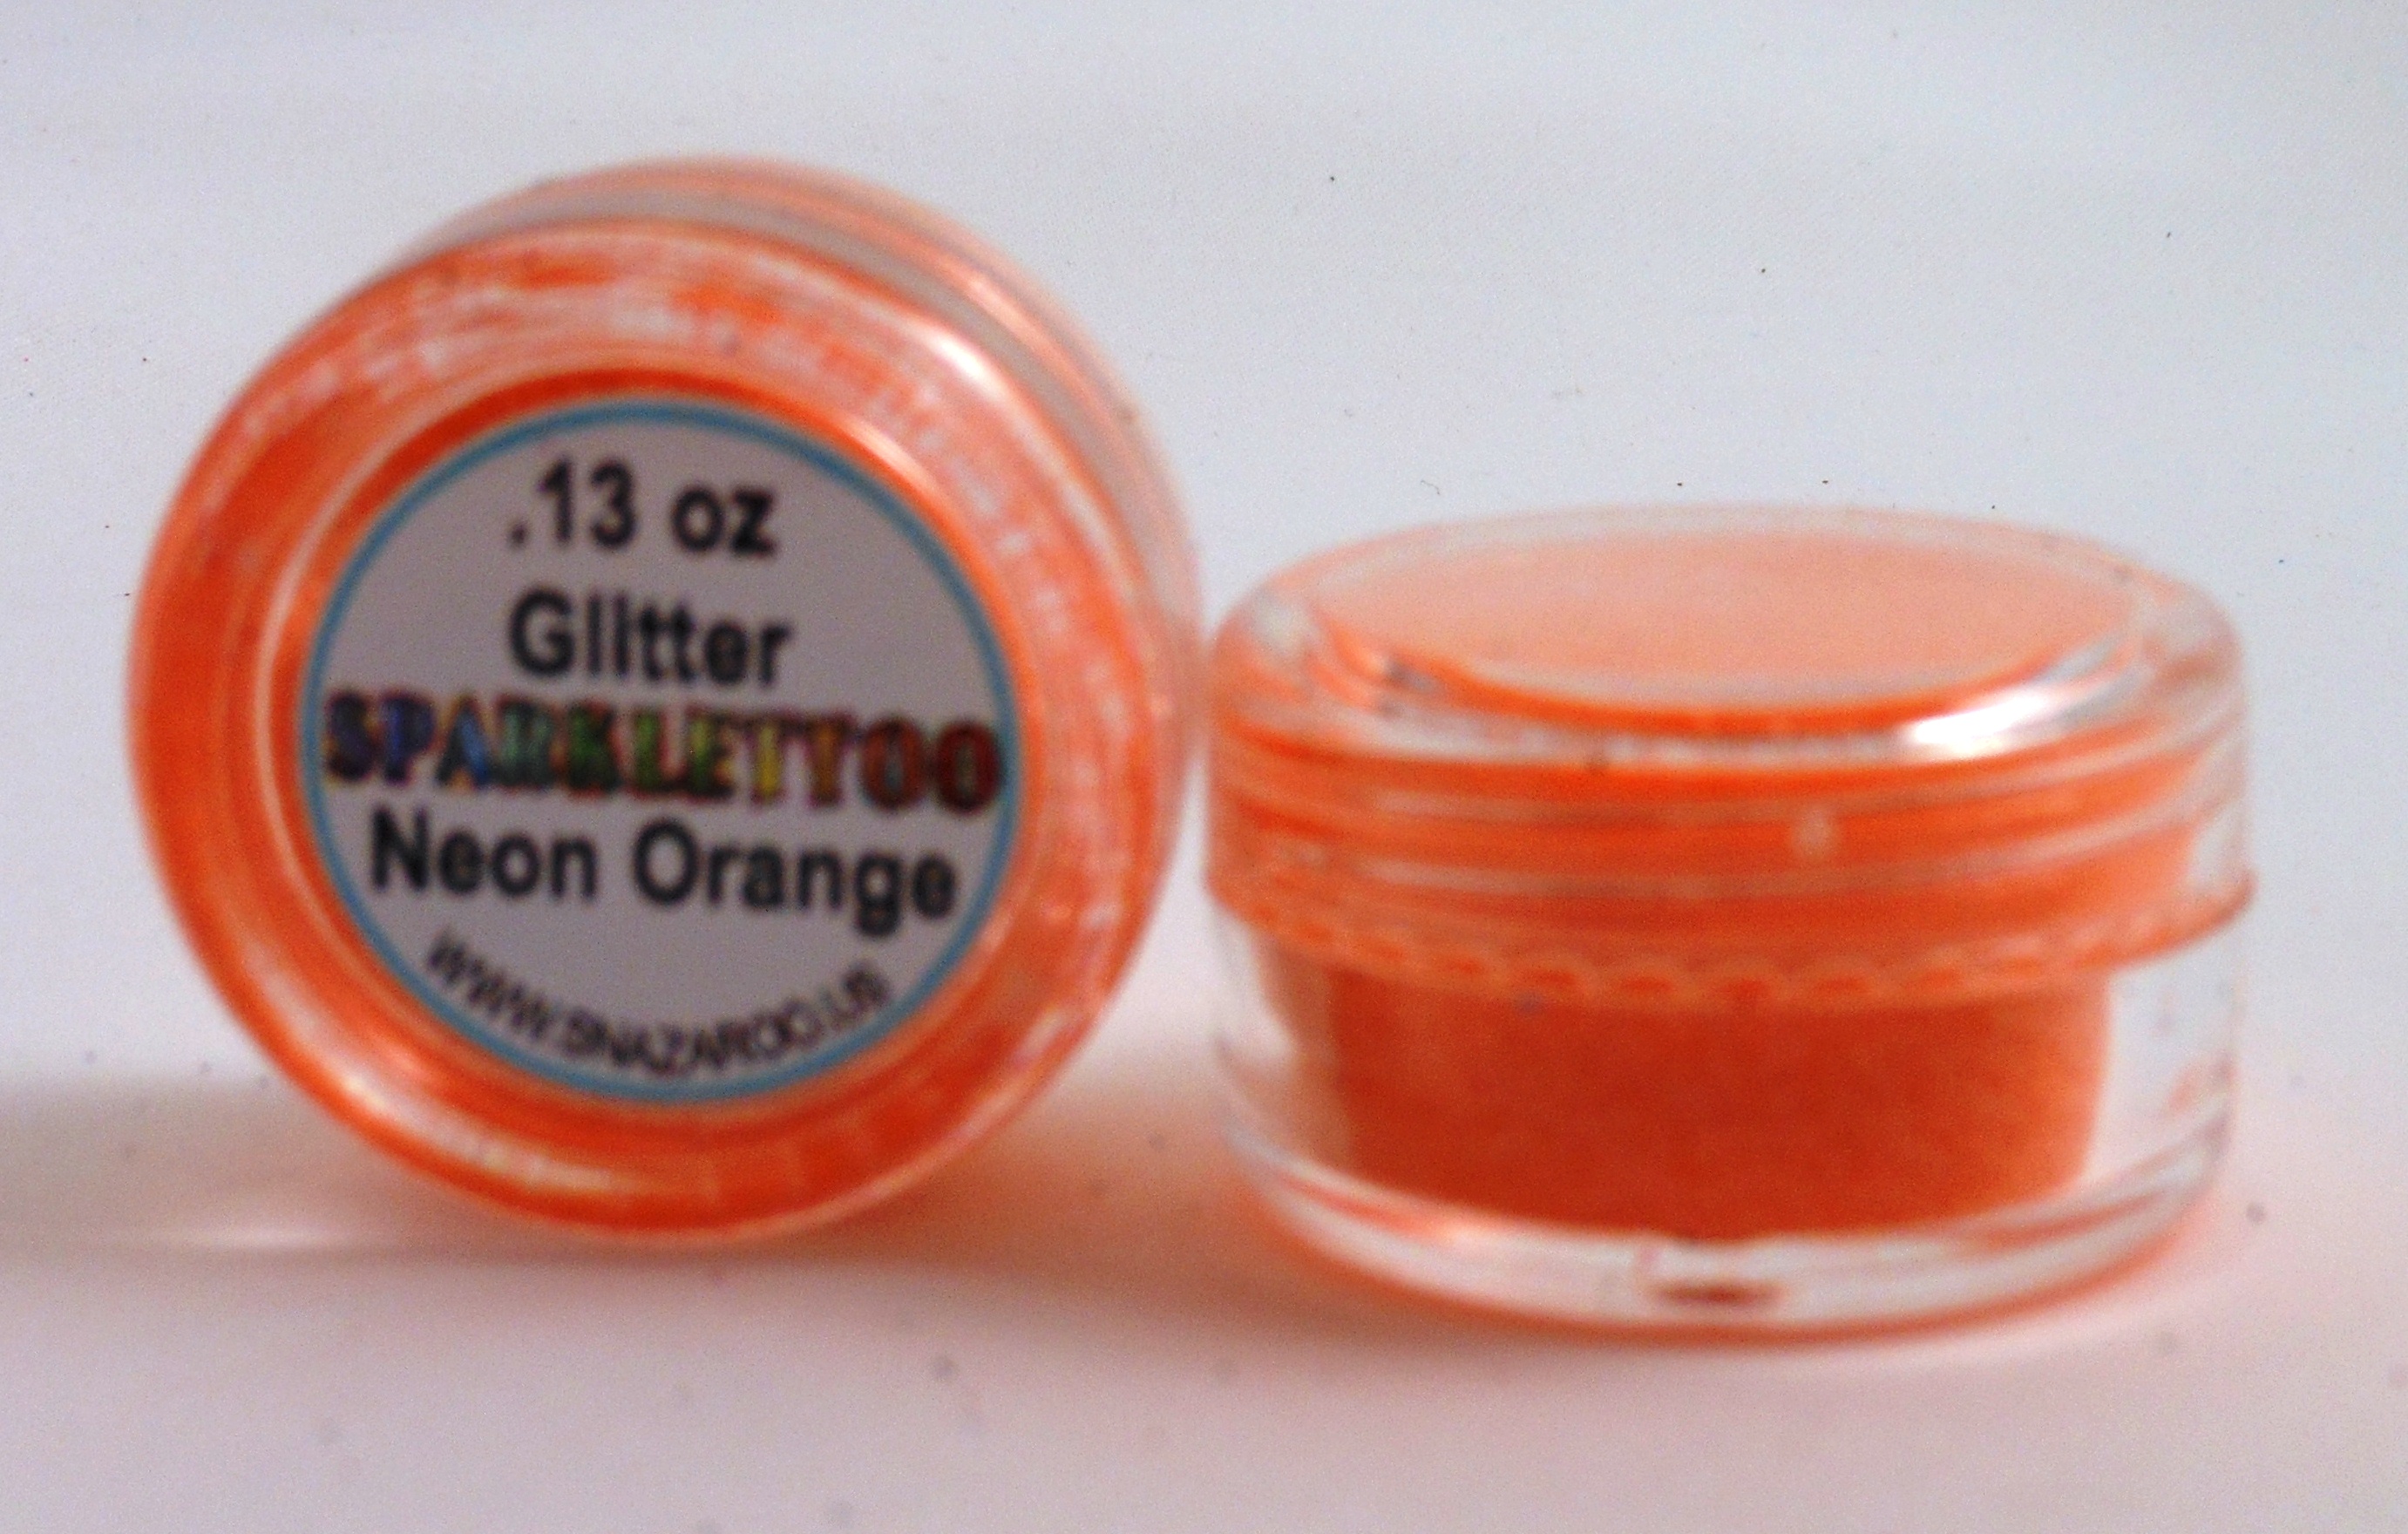 Glitter Neon Orange .13 oz.  